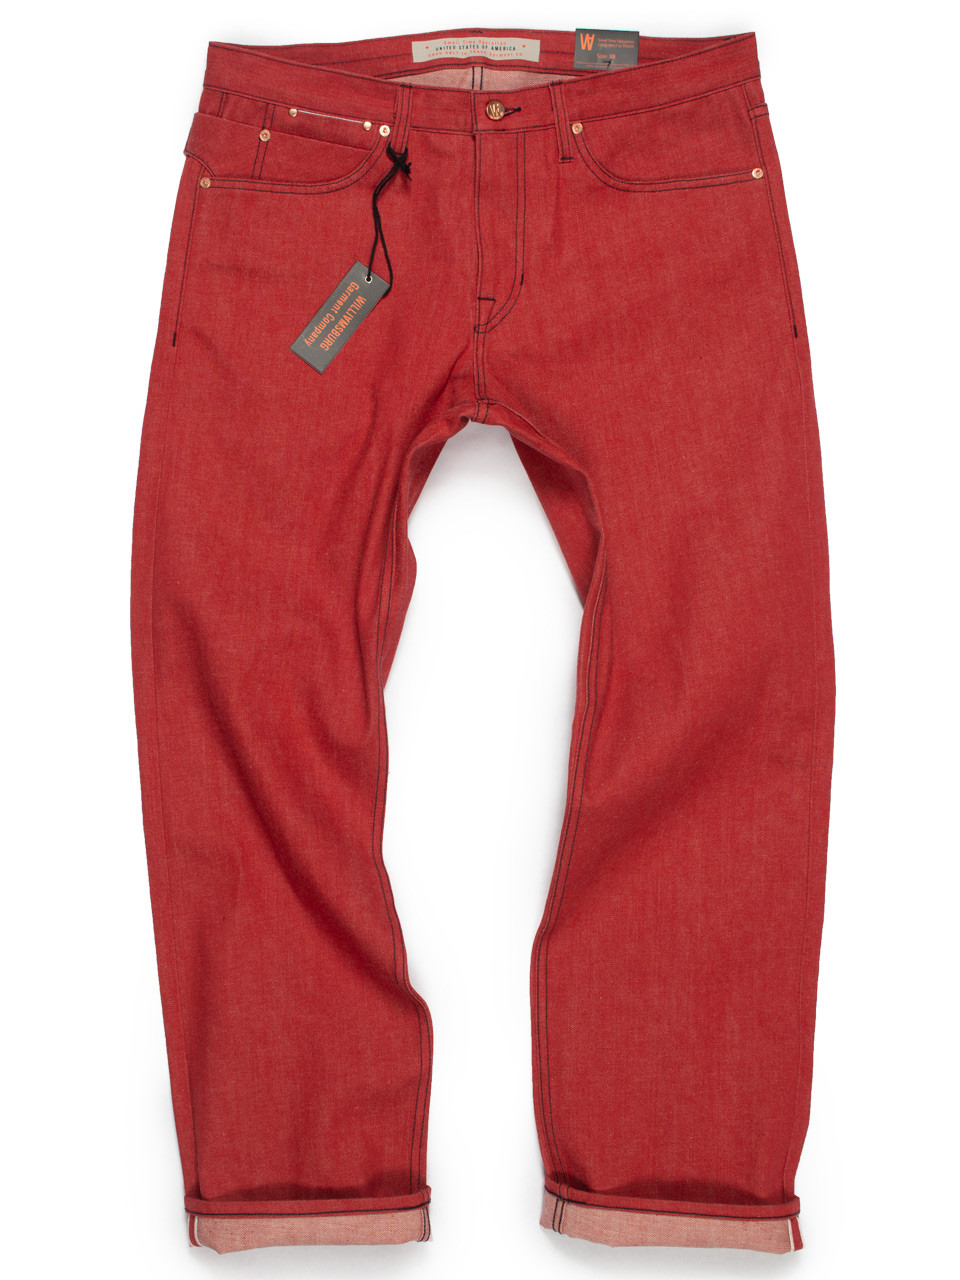 japanese red stitch denim jeans